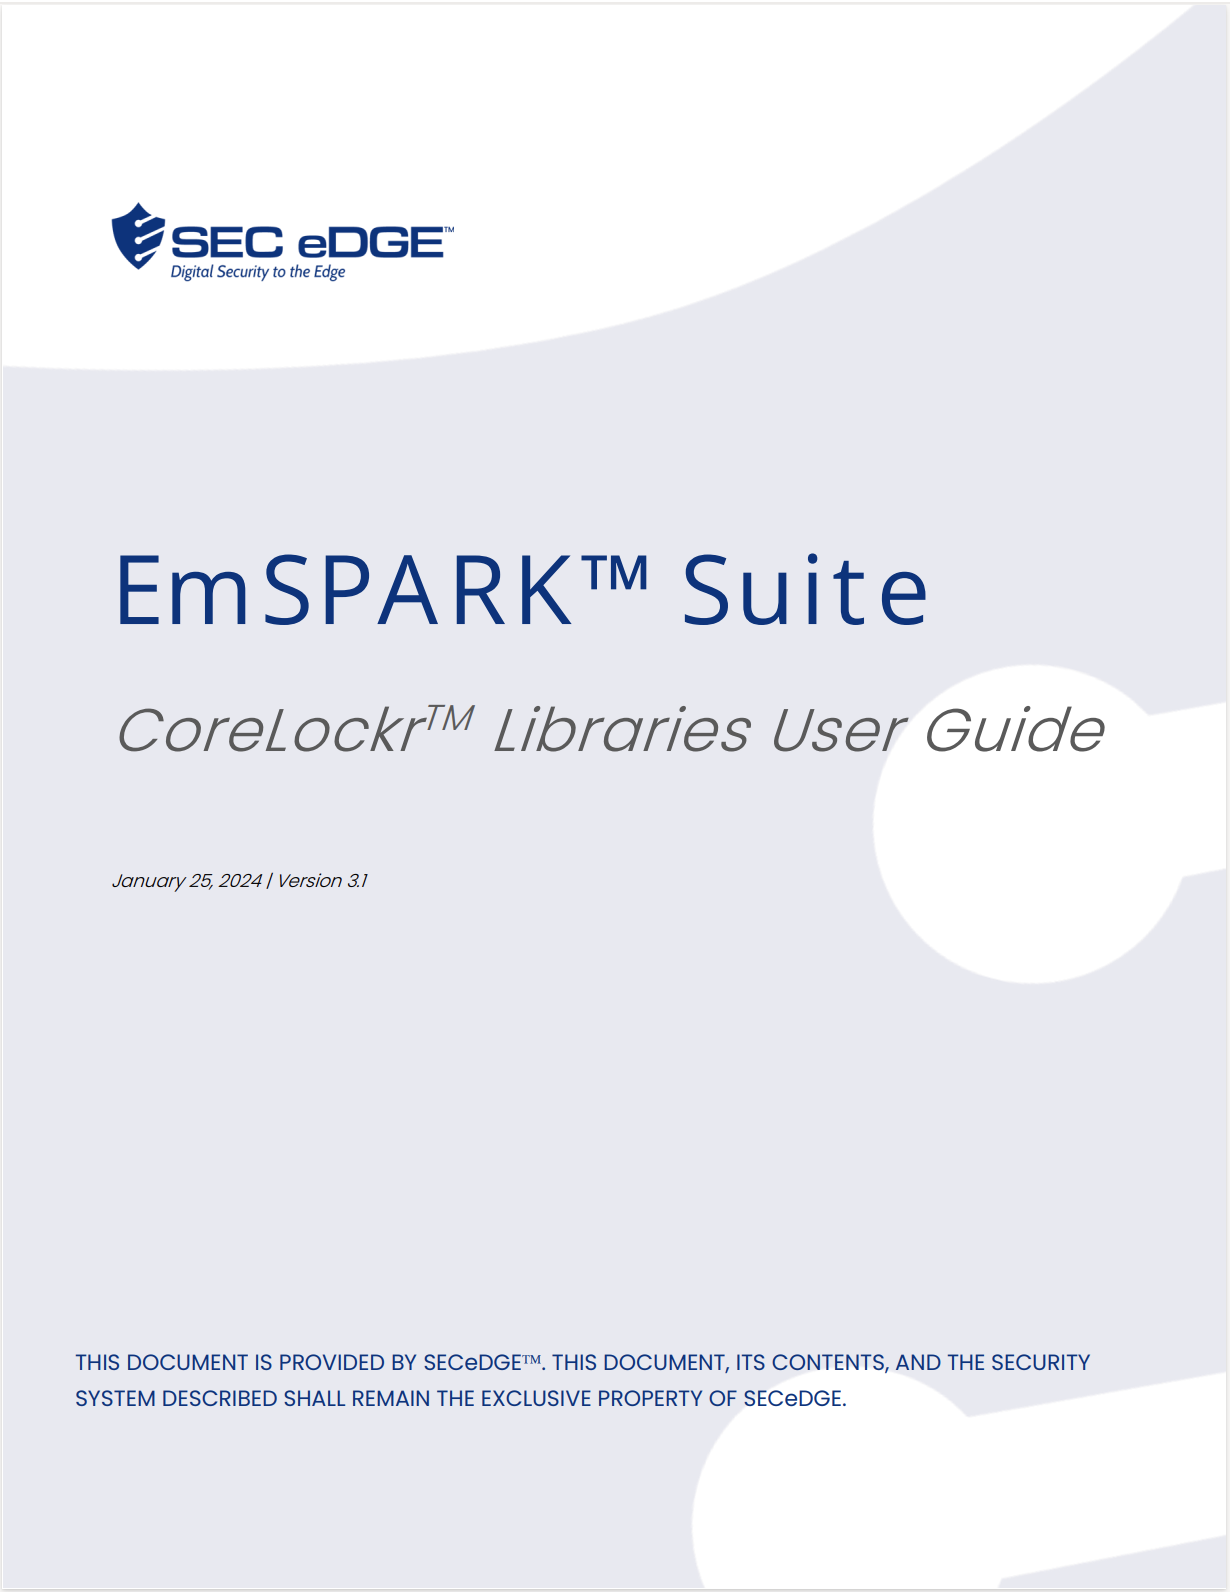 EmSPARK™ Security Suite CoreLOCKR™ Libraries User Guide version 3.1